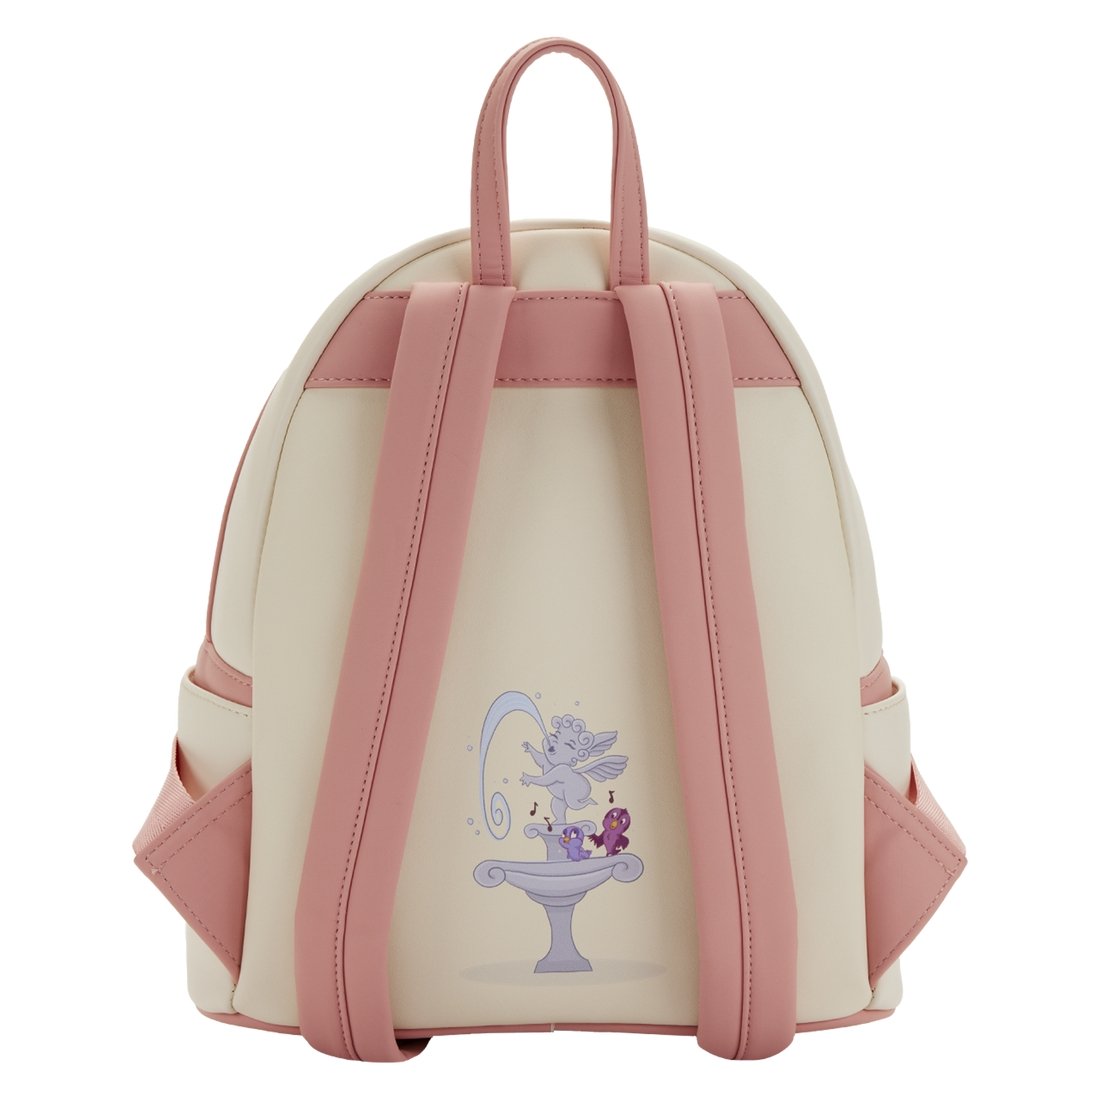 Meg & Hercules 25th Anniversary Mini Backpack - Rockamilly-Bags & Purses-Vintage